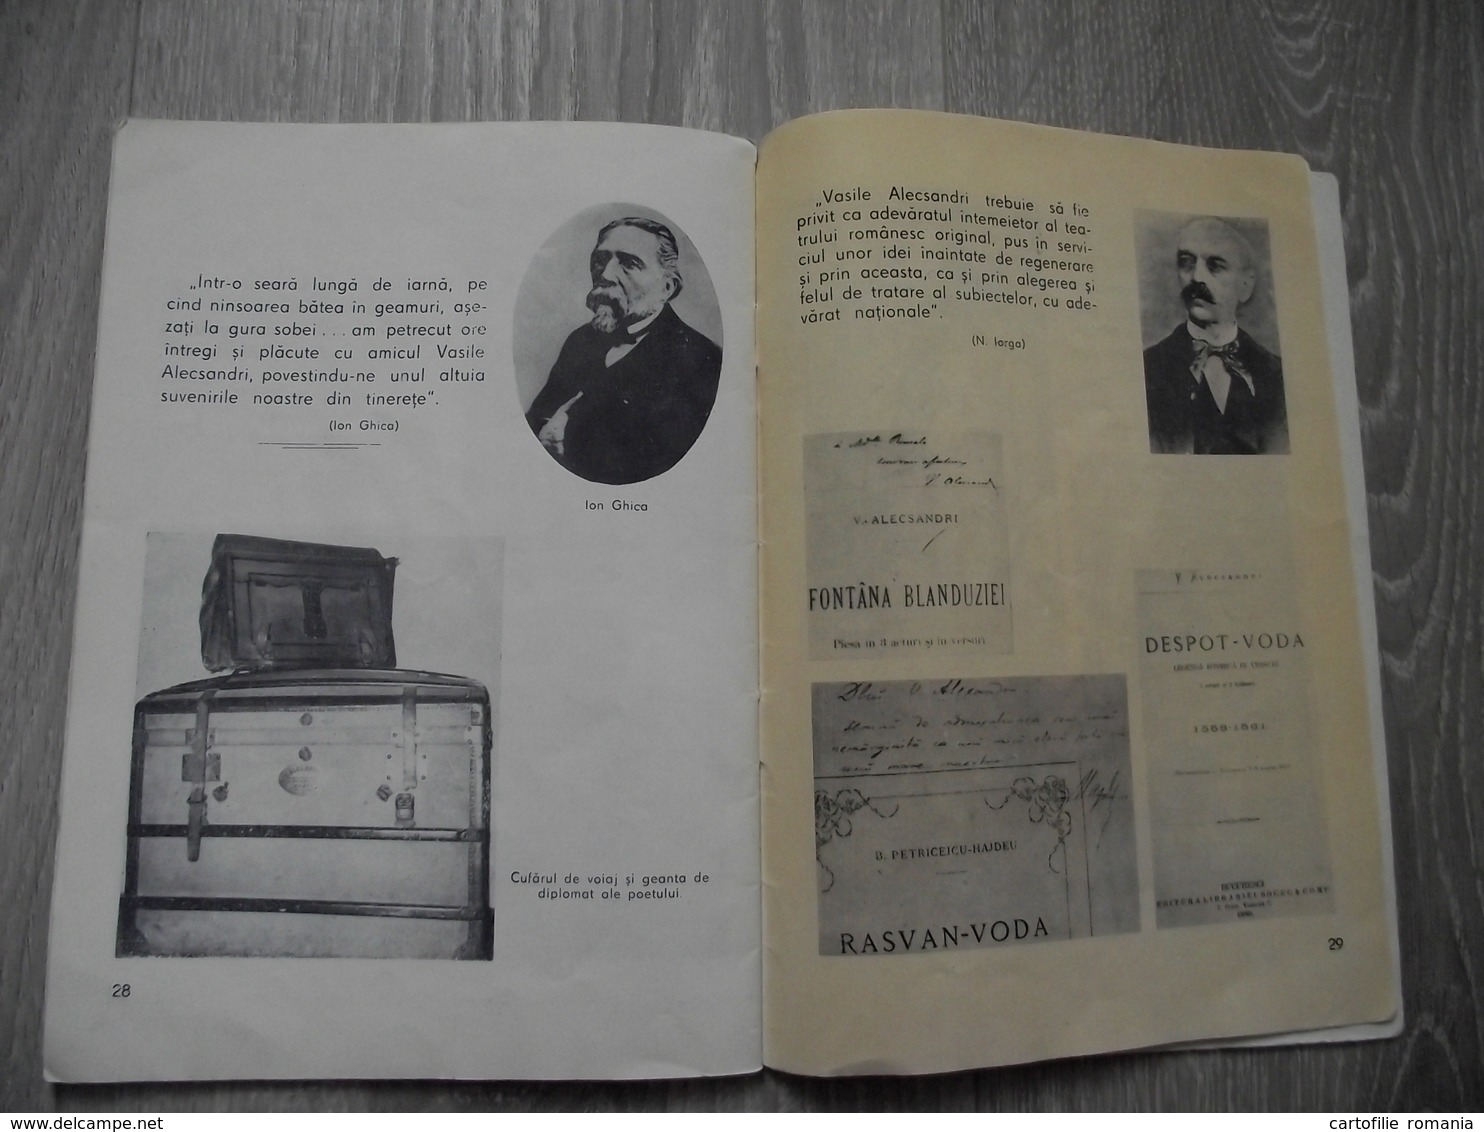 Romania - Iasi - Mircesti memorial house museum - Vasile Alecsandri - Tourism book brochure illustrations 31 pages